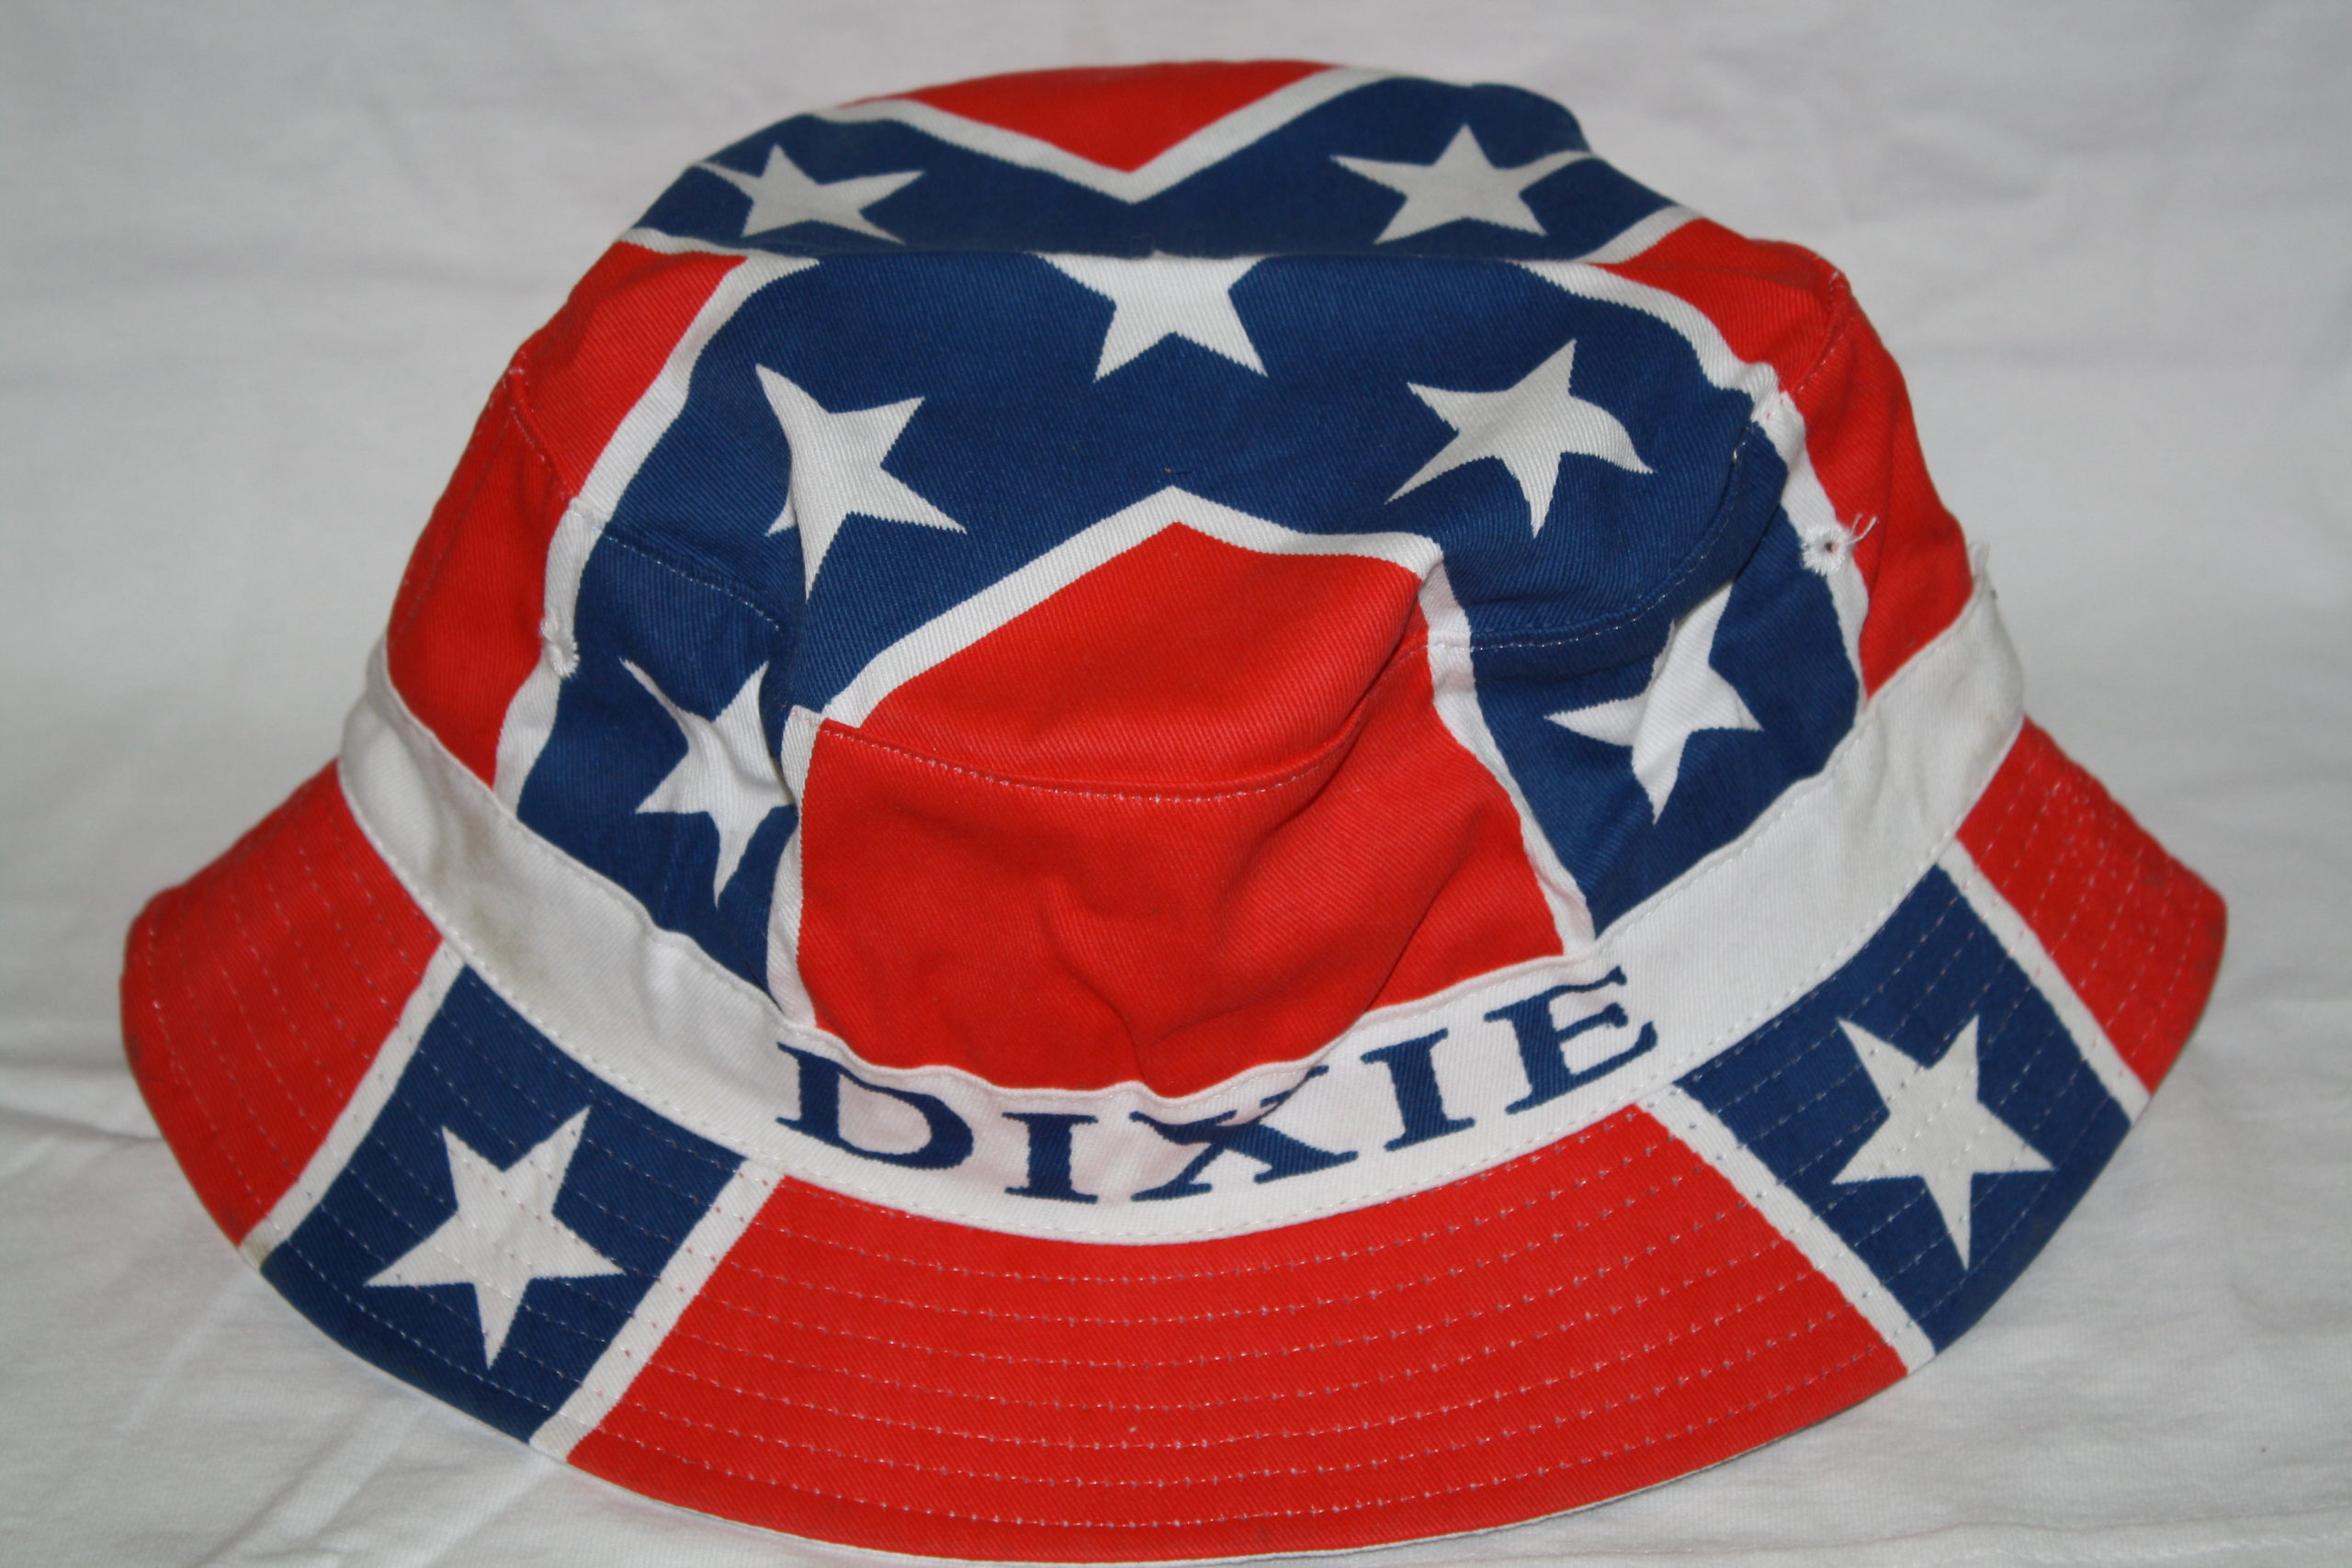 Dixie Fisherman Style Hat